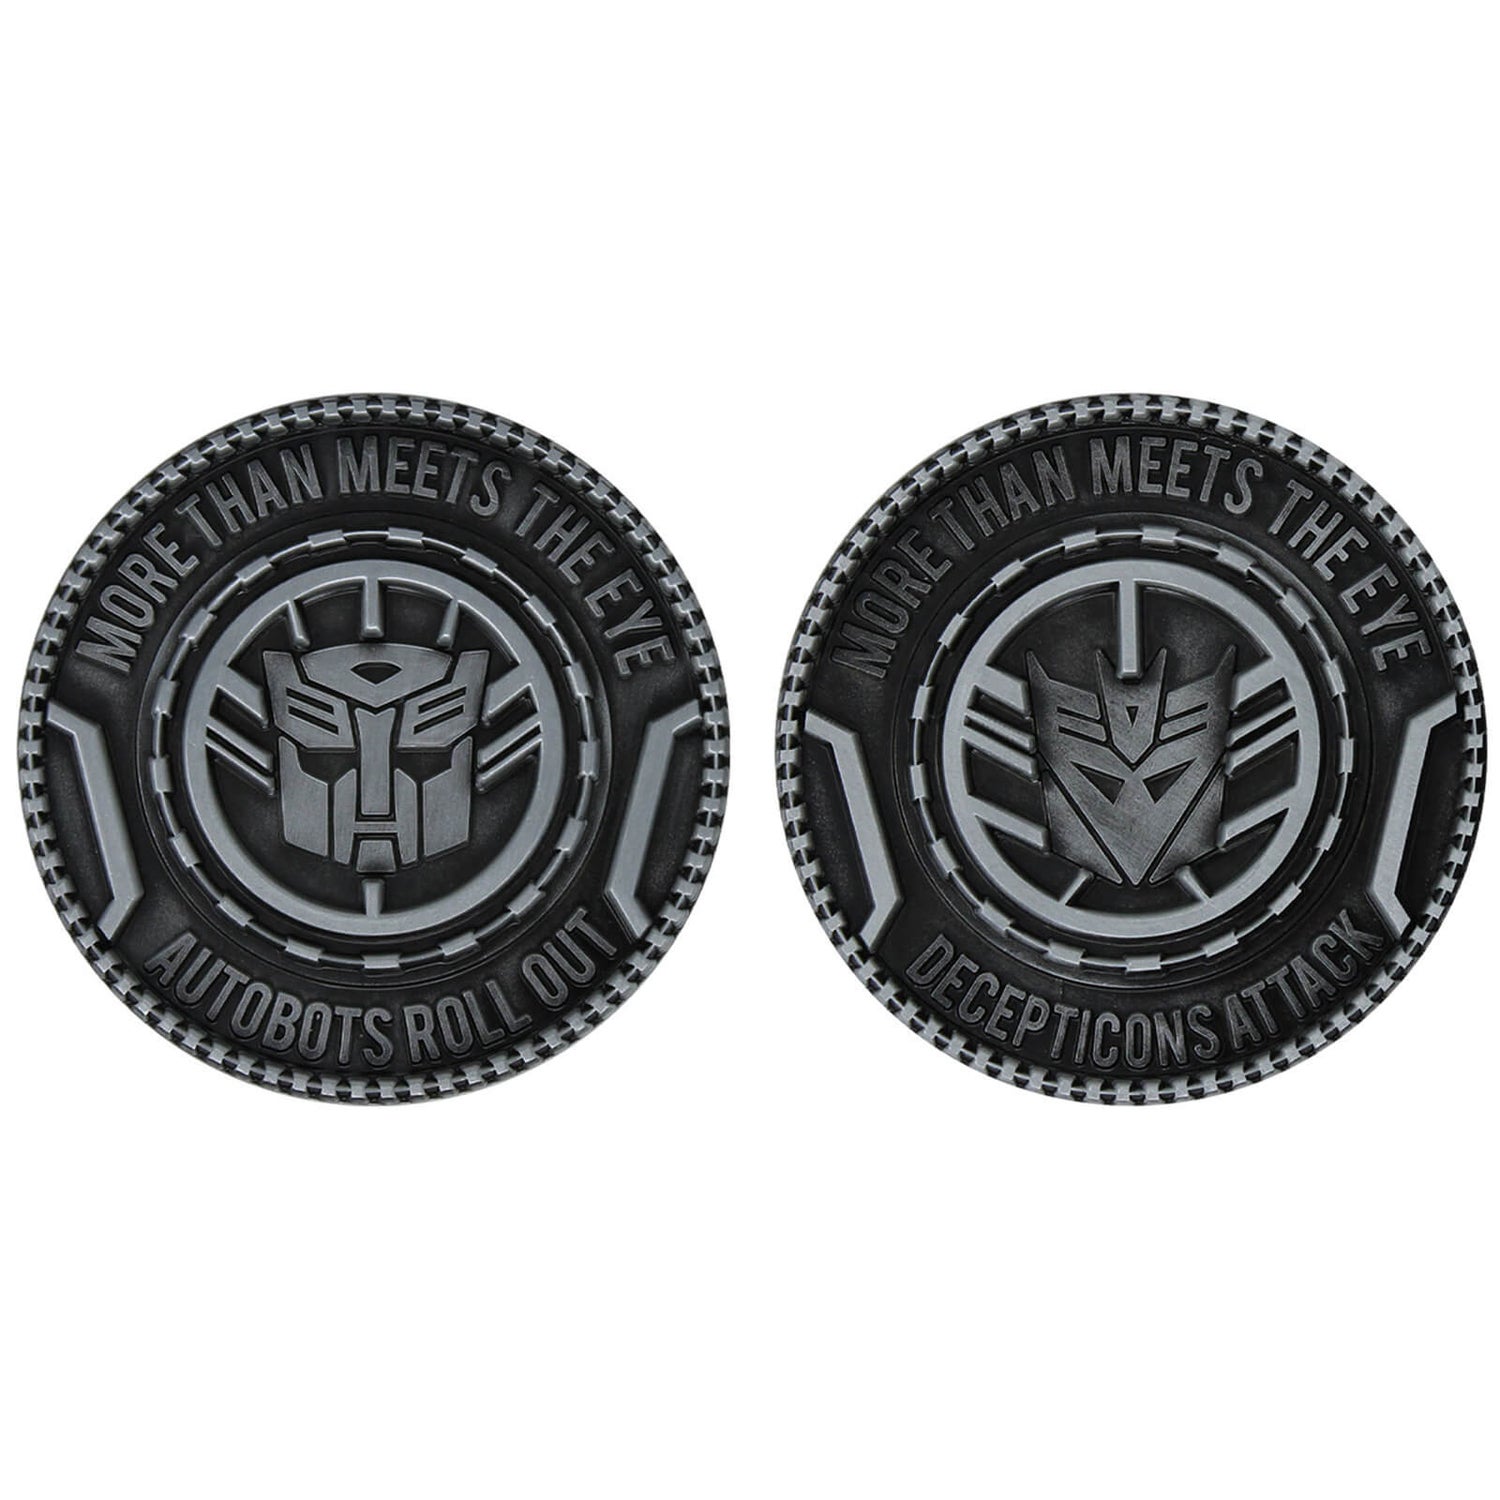 Fanattik Transformers Limited Edition Medallion Set